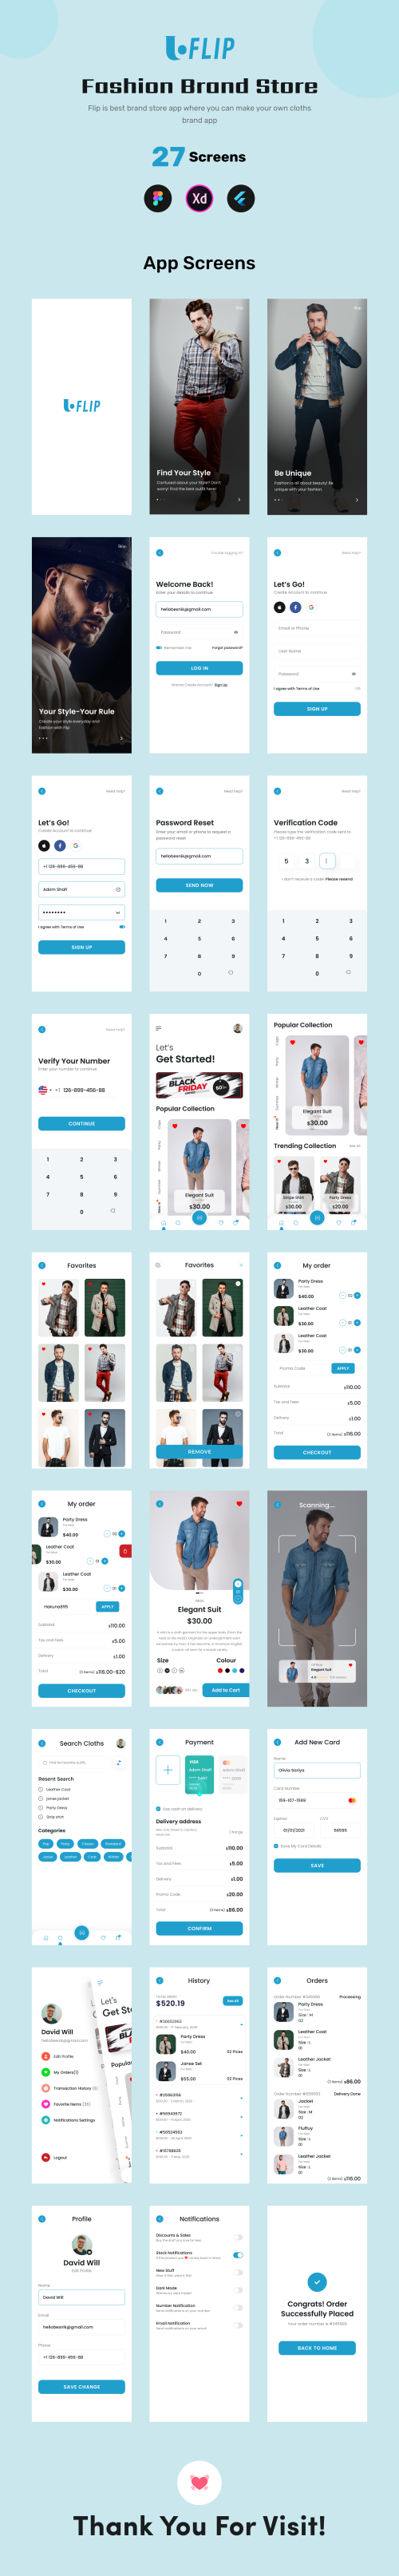 UIHut - Flip Fashion Brand App UI Kit - 9824